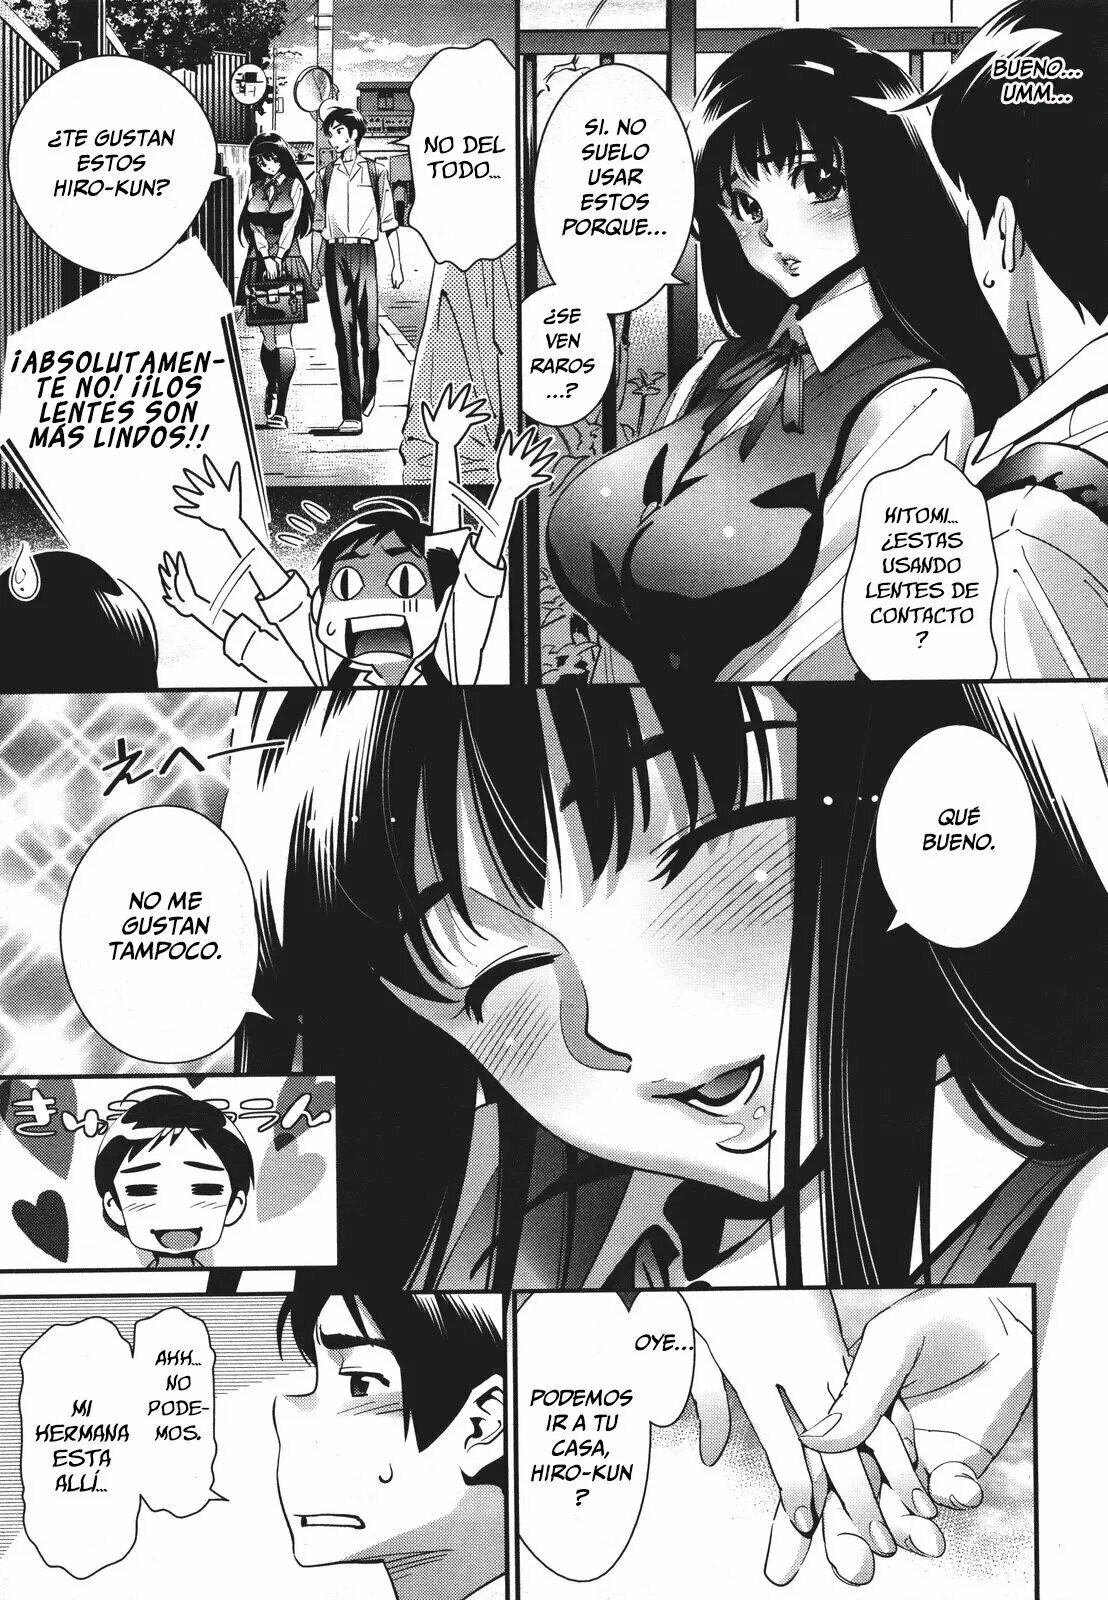 Megane no Megami #3 (Poca censura) - 10